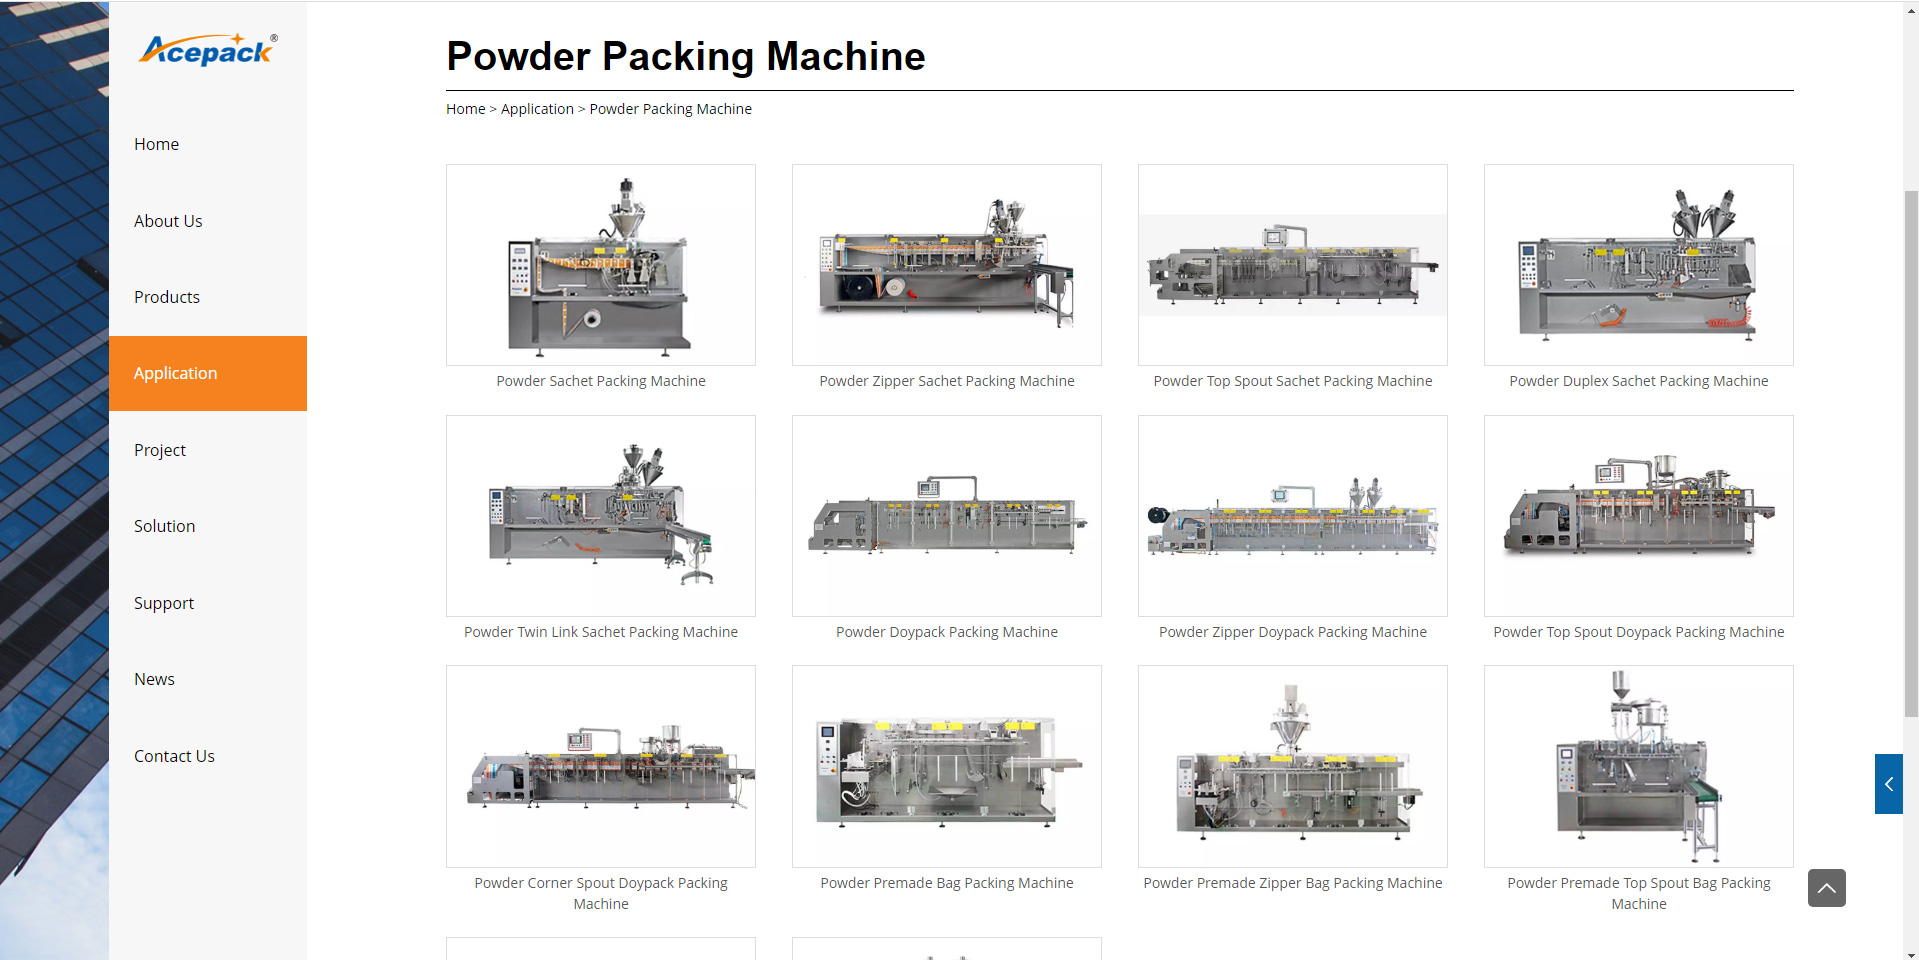 Acepack powder packing machine